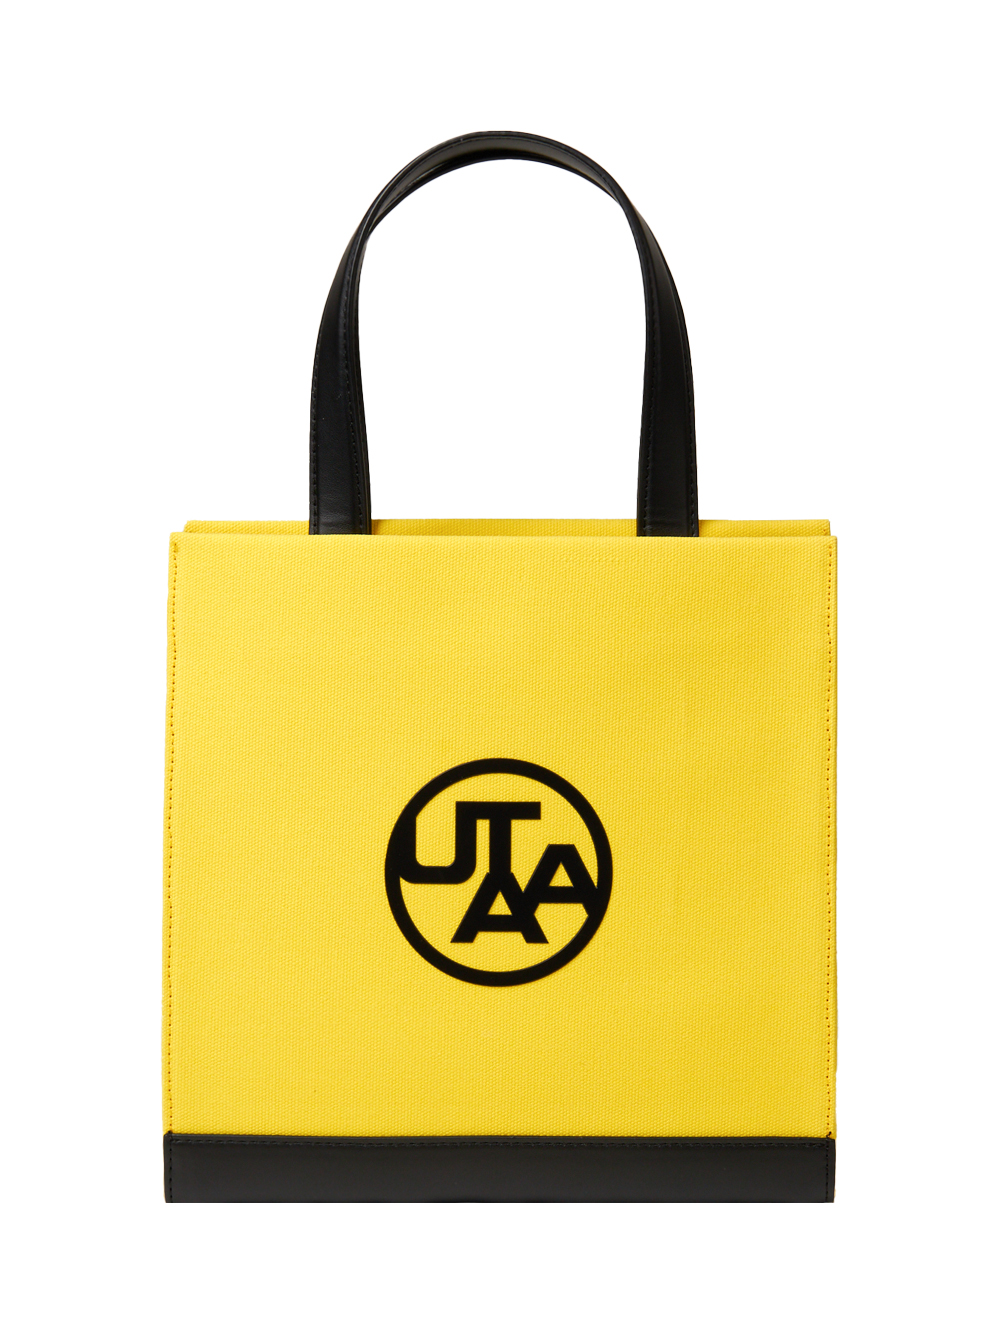 UTAA Color Match Emblem Tote Bag : Yellow (UC0GAU315YE)